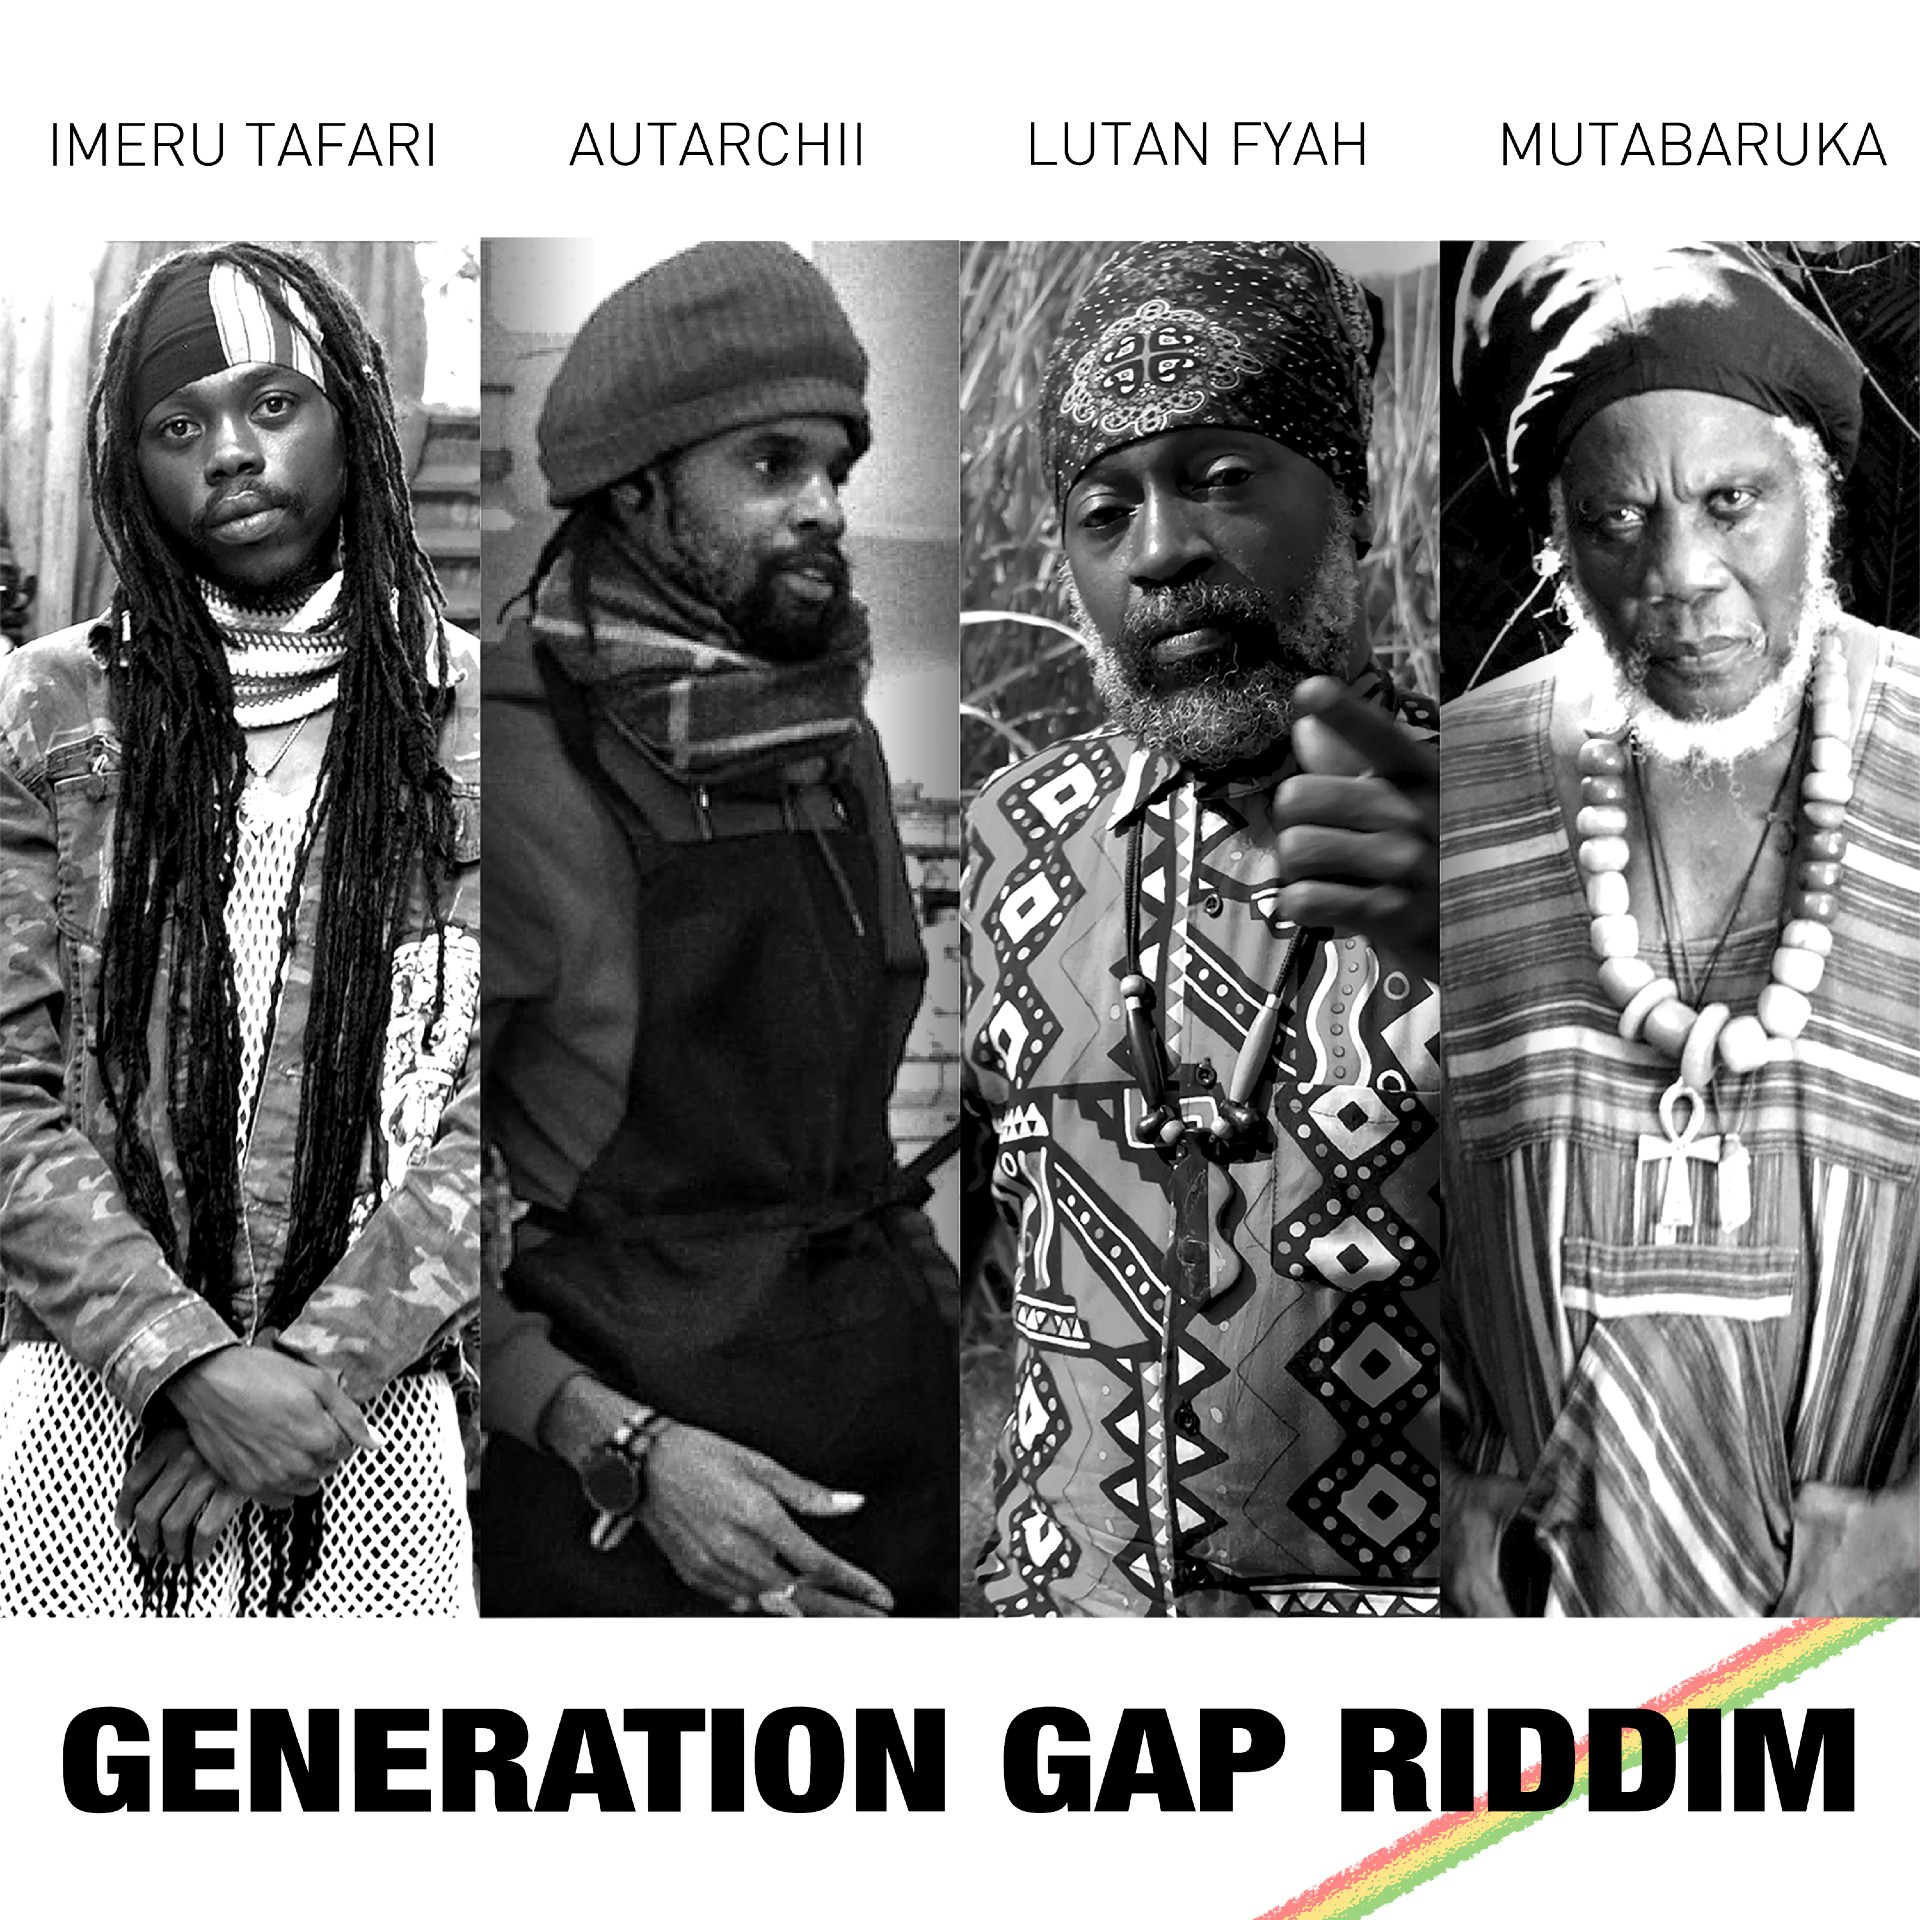 Generation Gap Riddim | Mutabaruka, Autarchii, Lutan Fyah, Imeru Tafari